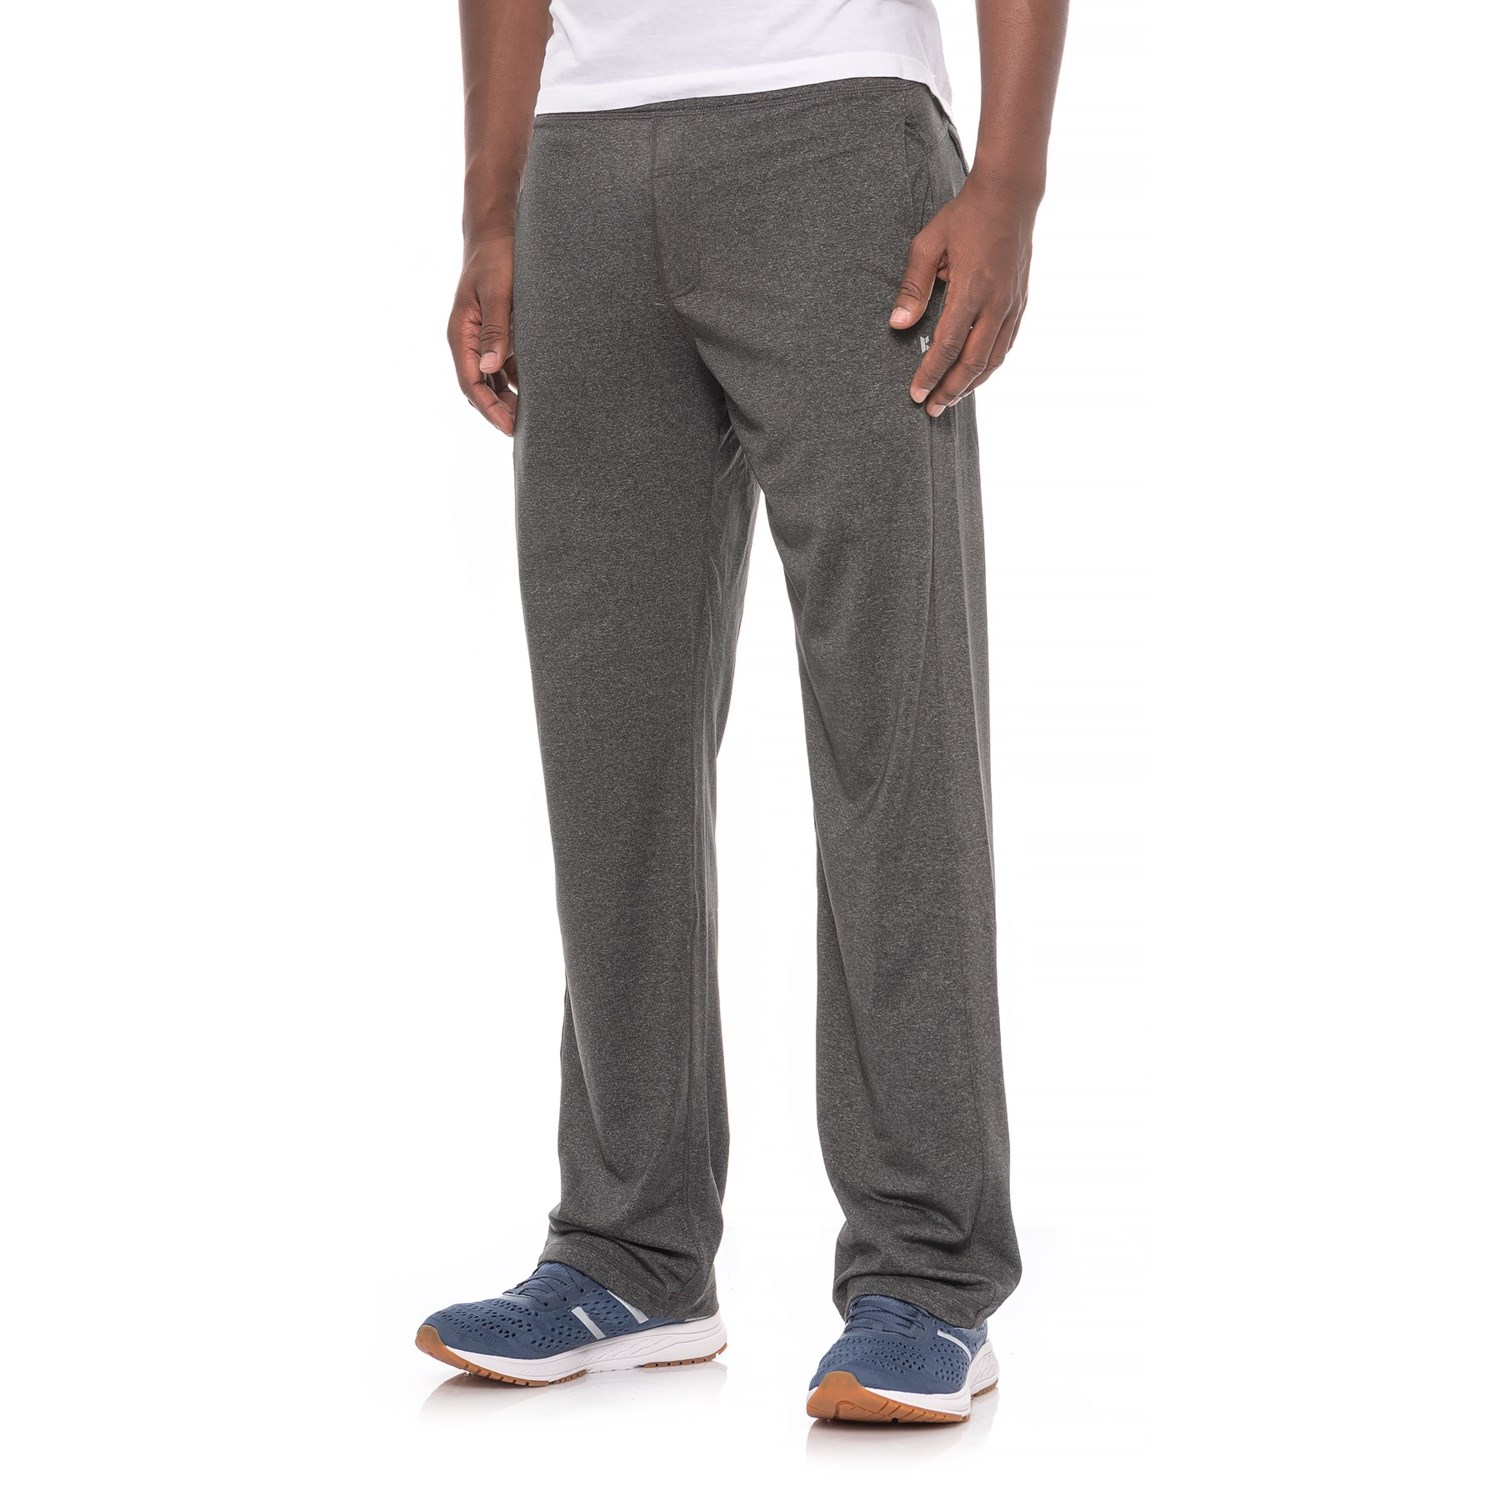 Kyodan Jersey-Knit Sweatpants (For Men) - Save 55%